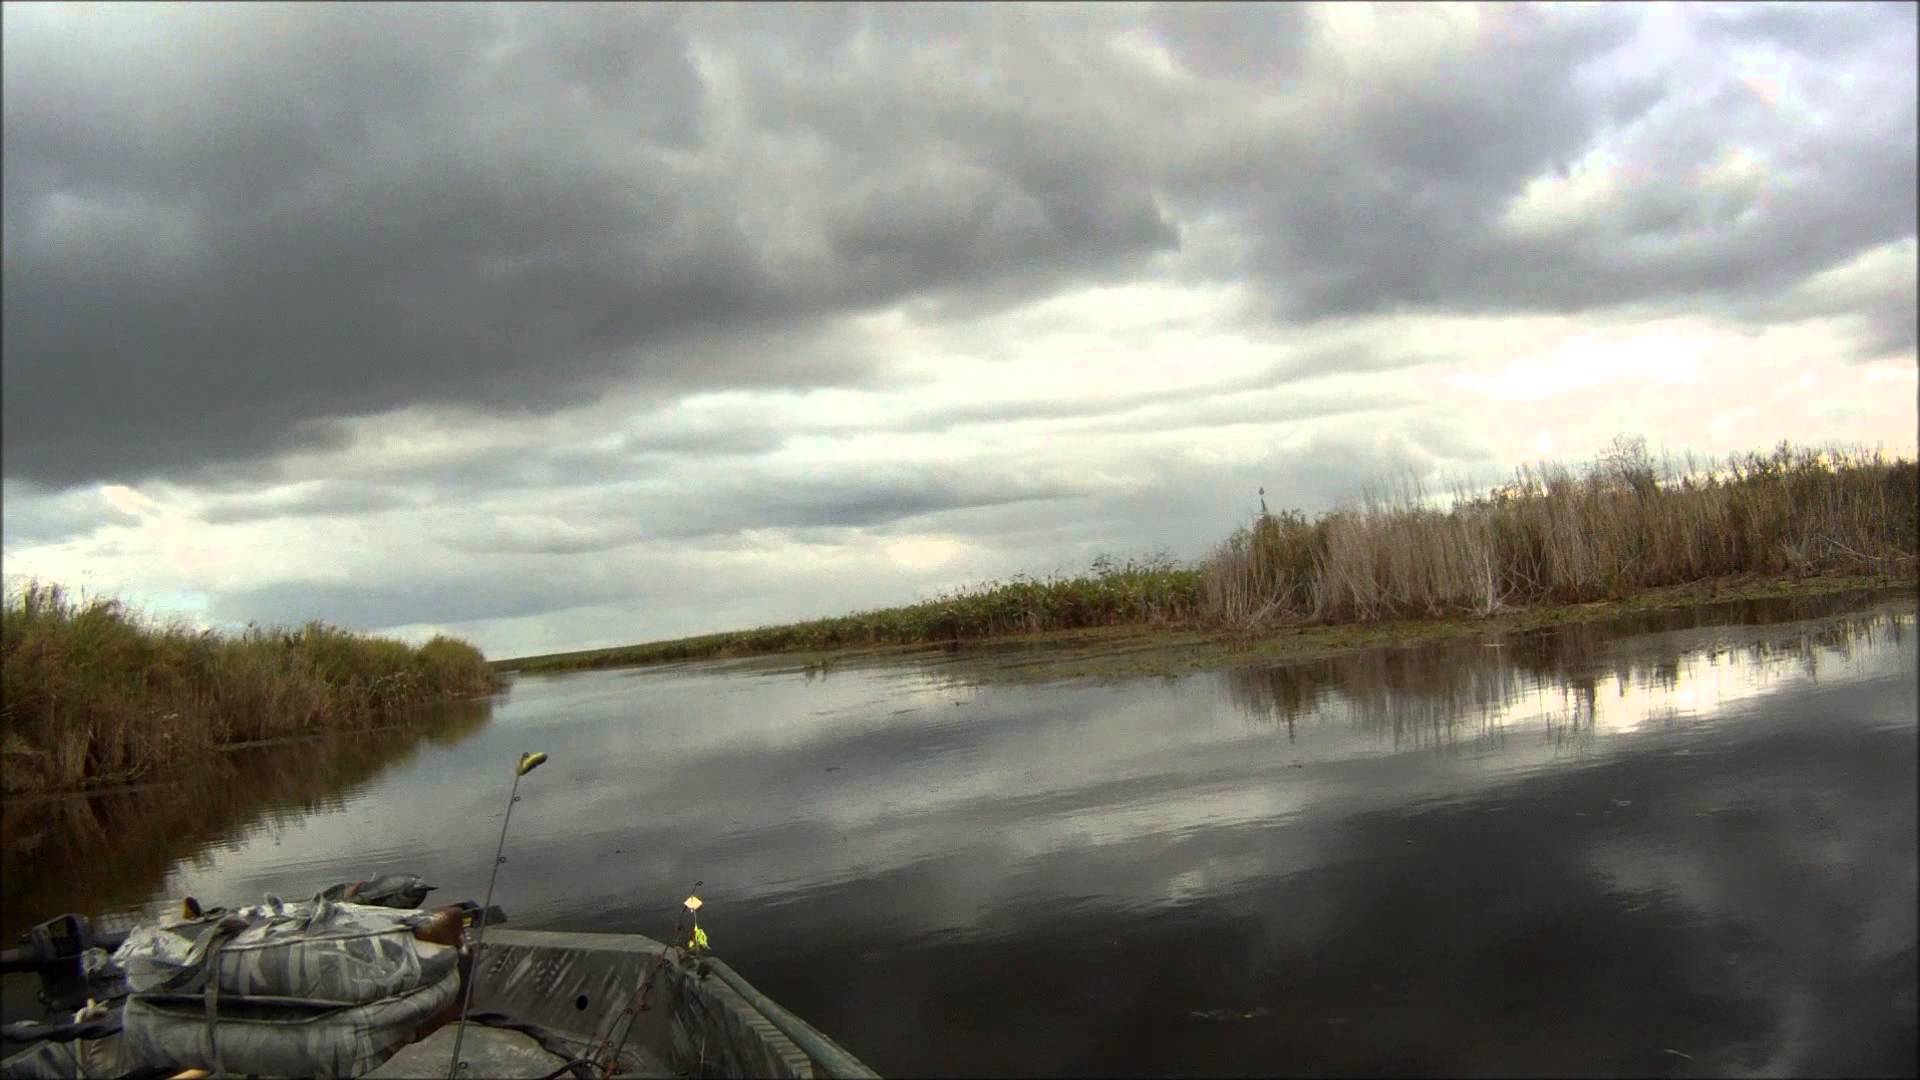 Riding around Lake Okeechobee on the Bass Boat - YouTube